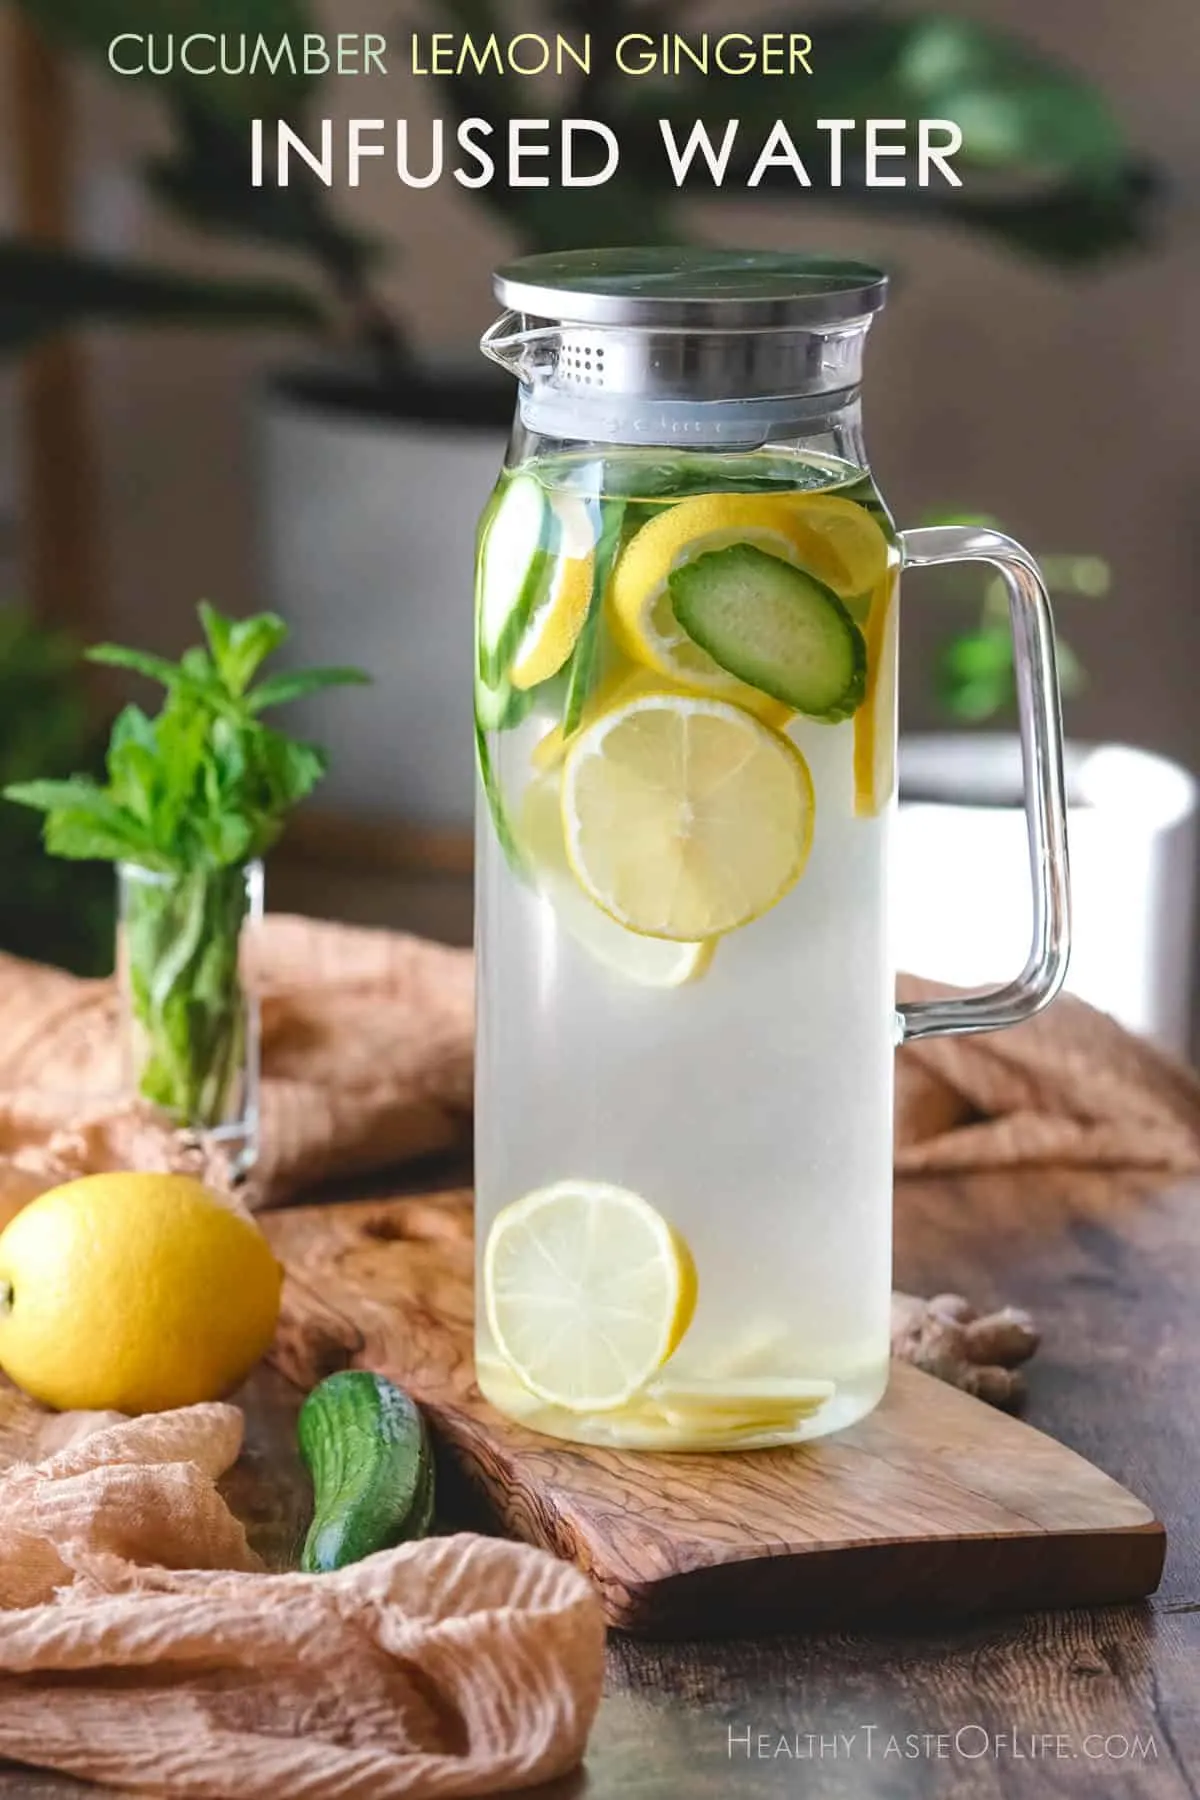 Cucumber Lemon Ginger Water Benefits + Recipe | Healthy Taste Of Life